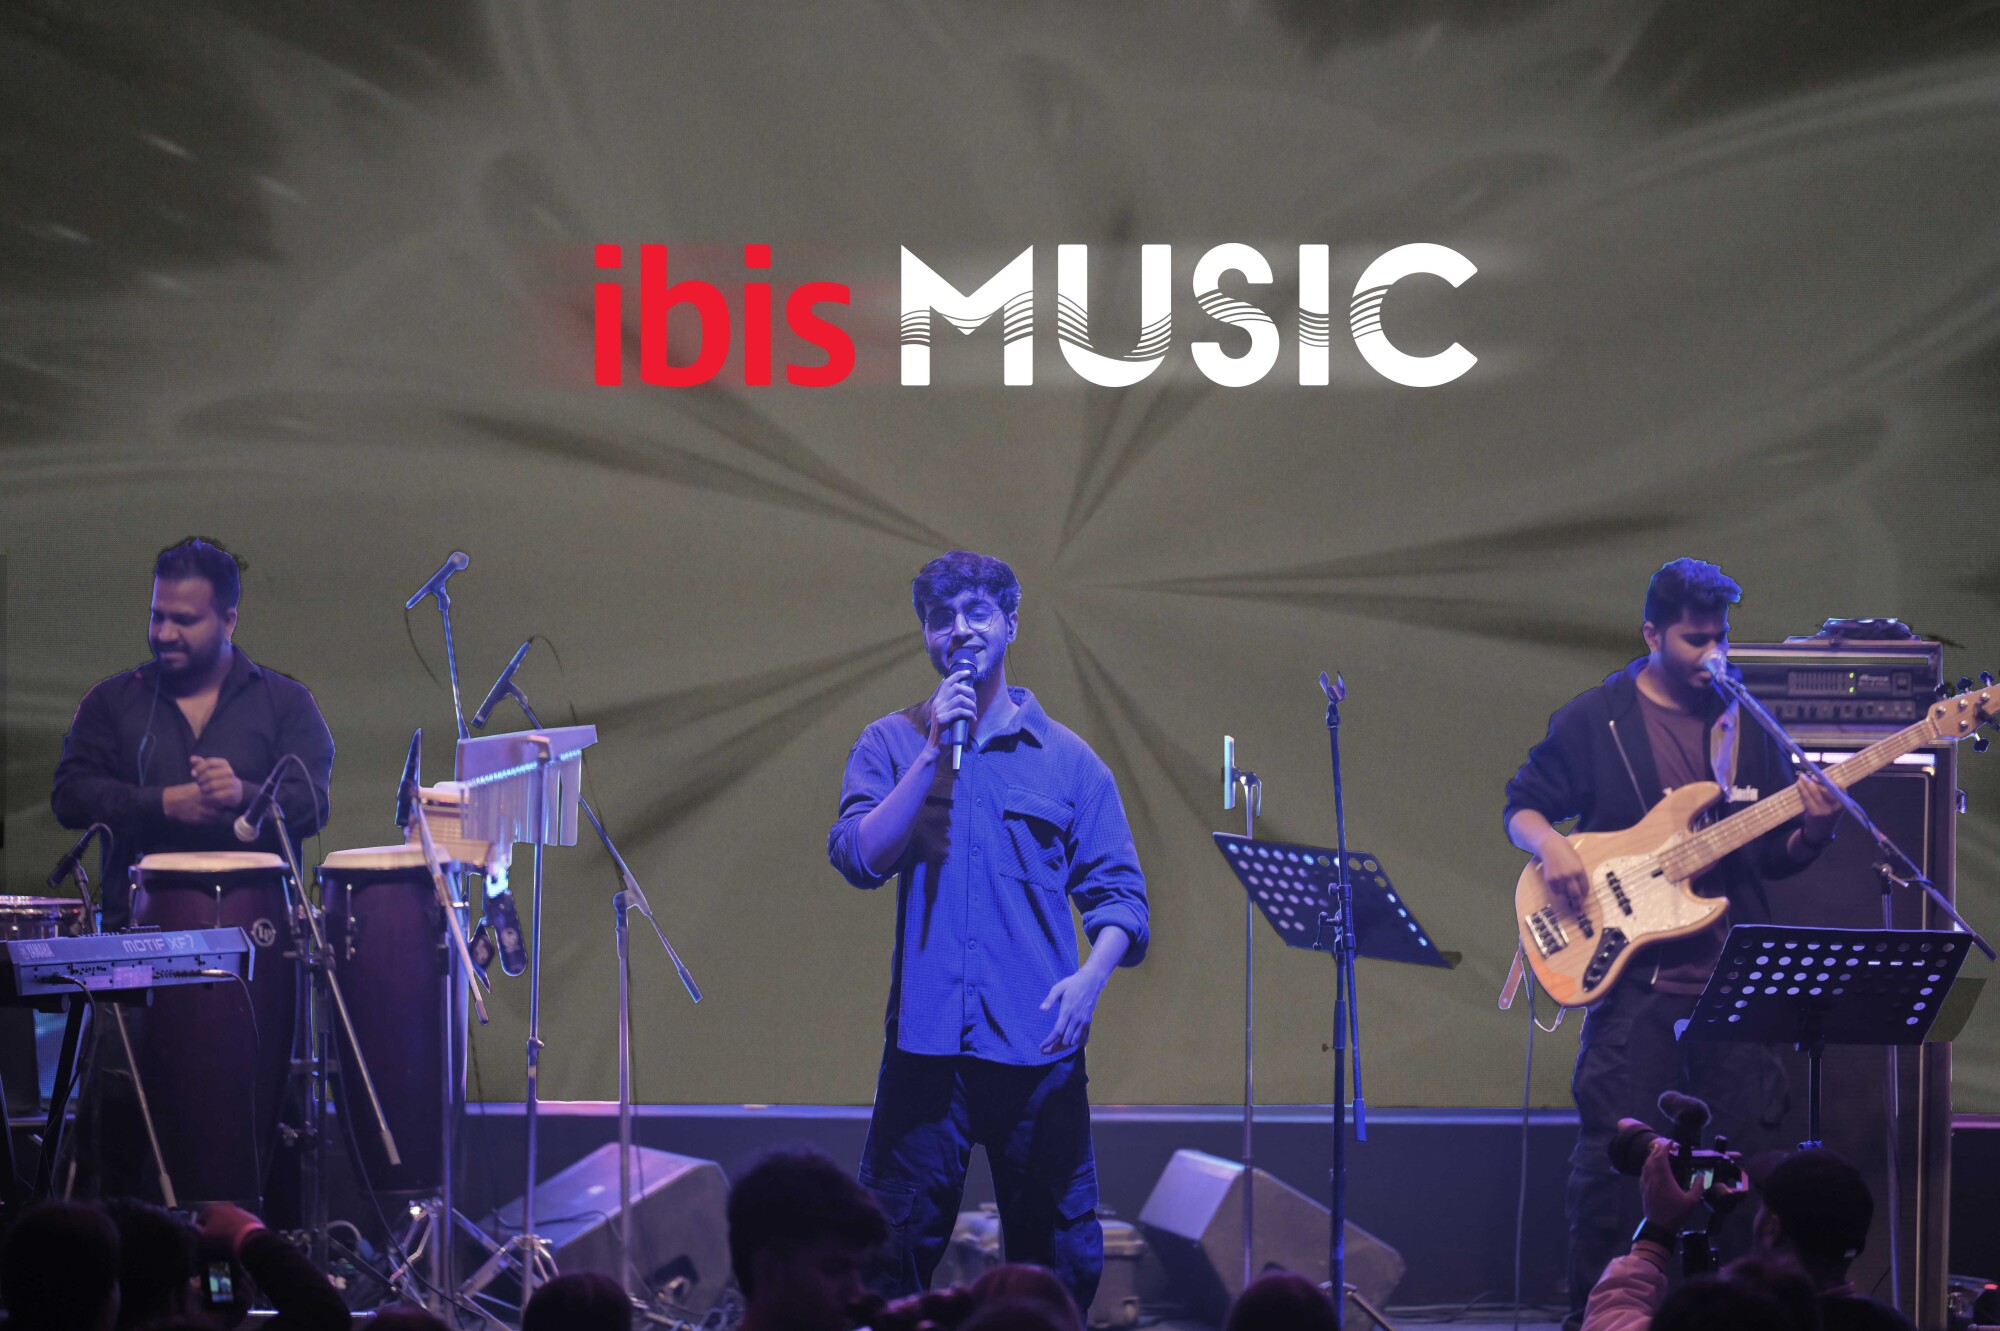 Varun Jain performing at ibis Music  India launch